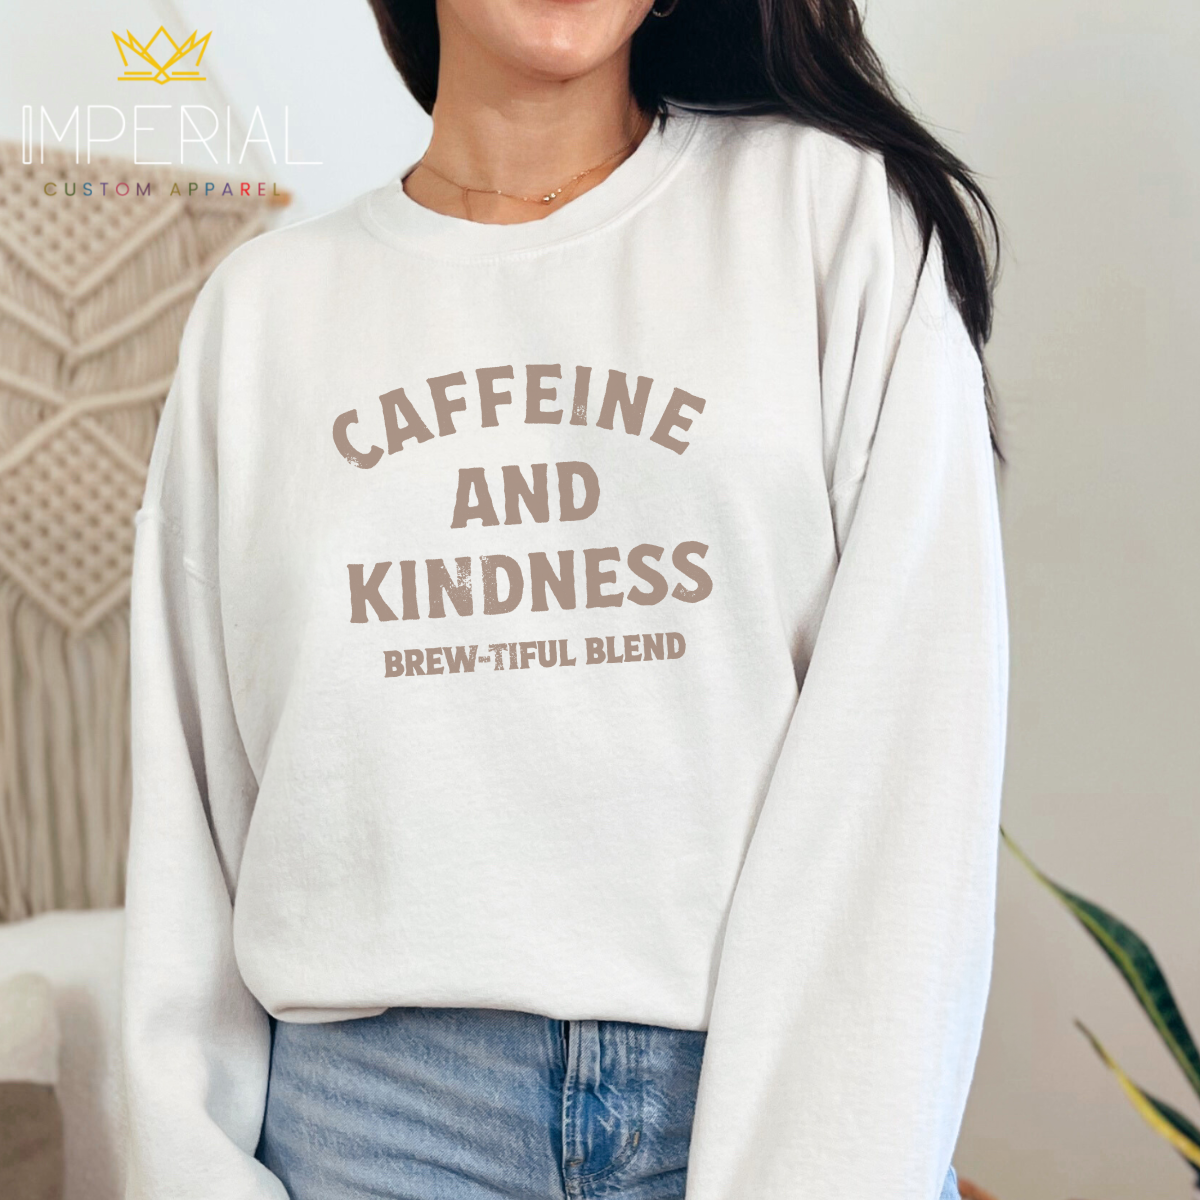 Caffeine and Kindness Brew-tiful Blend